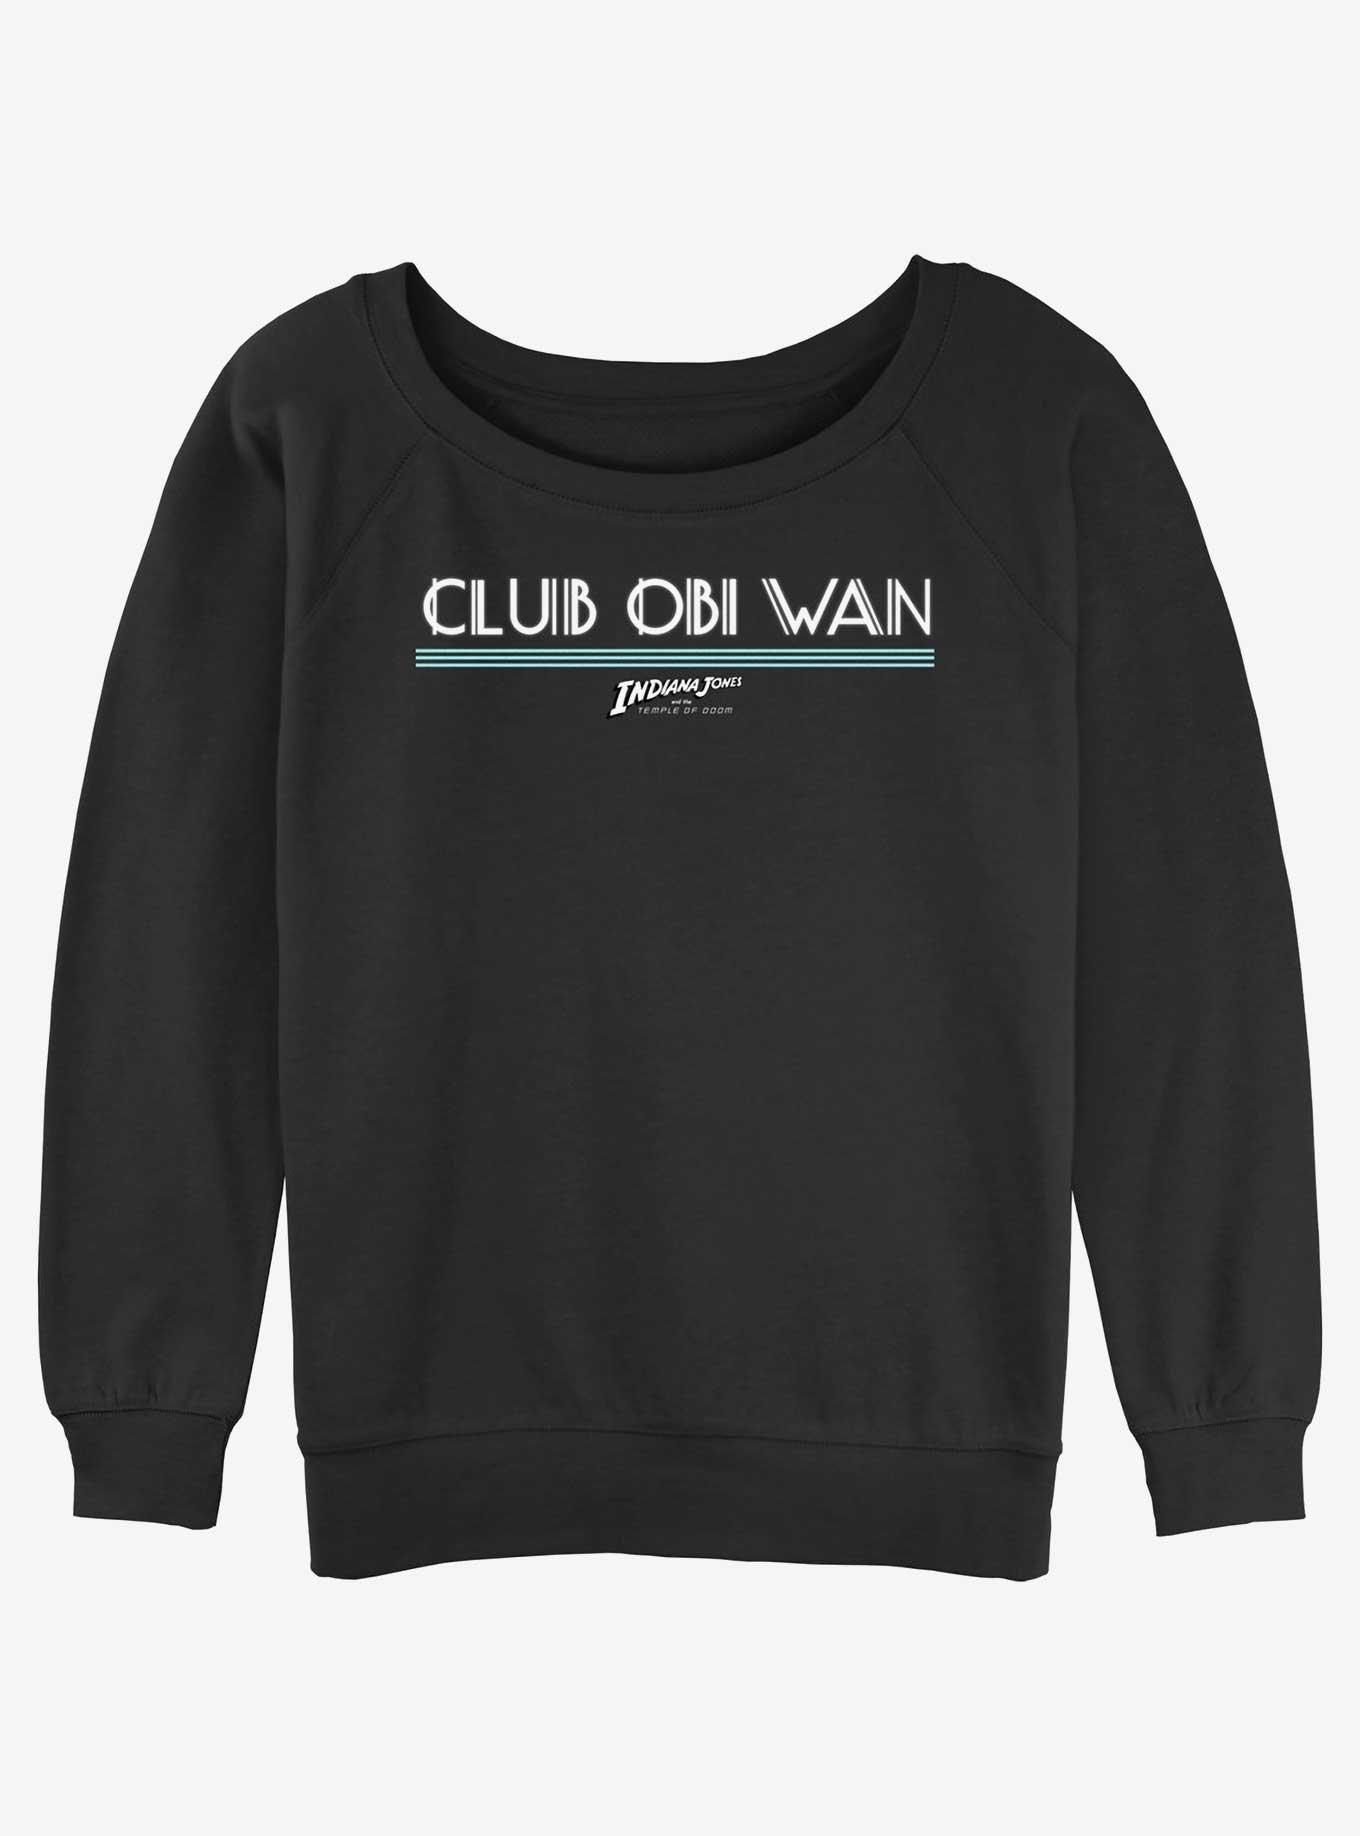 Indiana Jones Club Obi Wan Girls Slouchy Sweatshirt